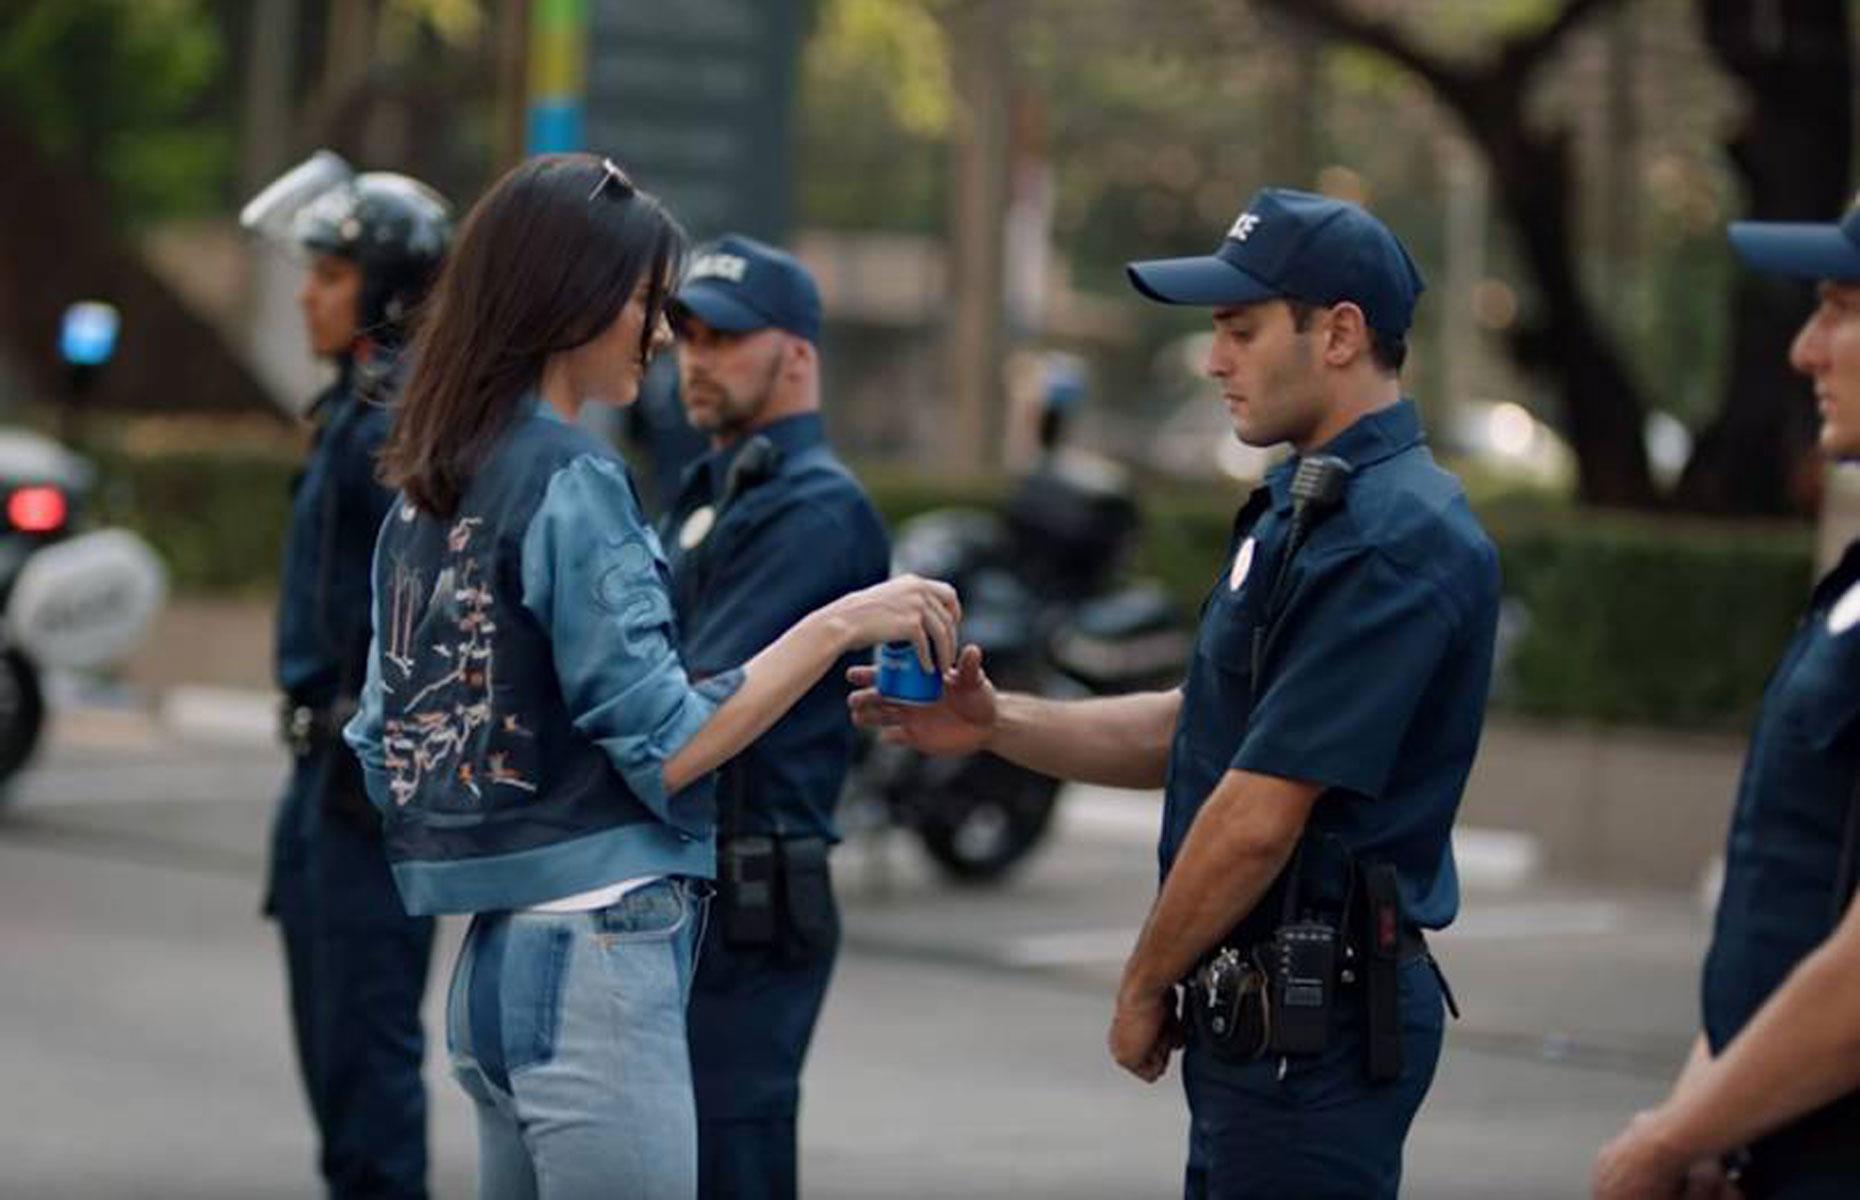 Pepsi's Kendall Jenner activist ad misfire